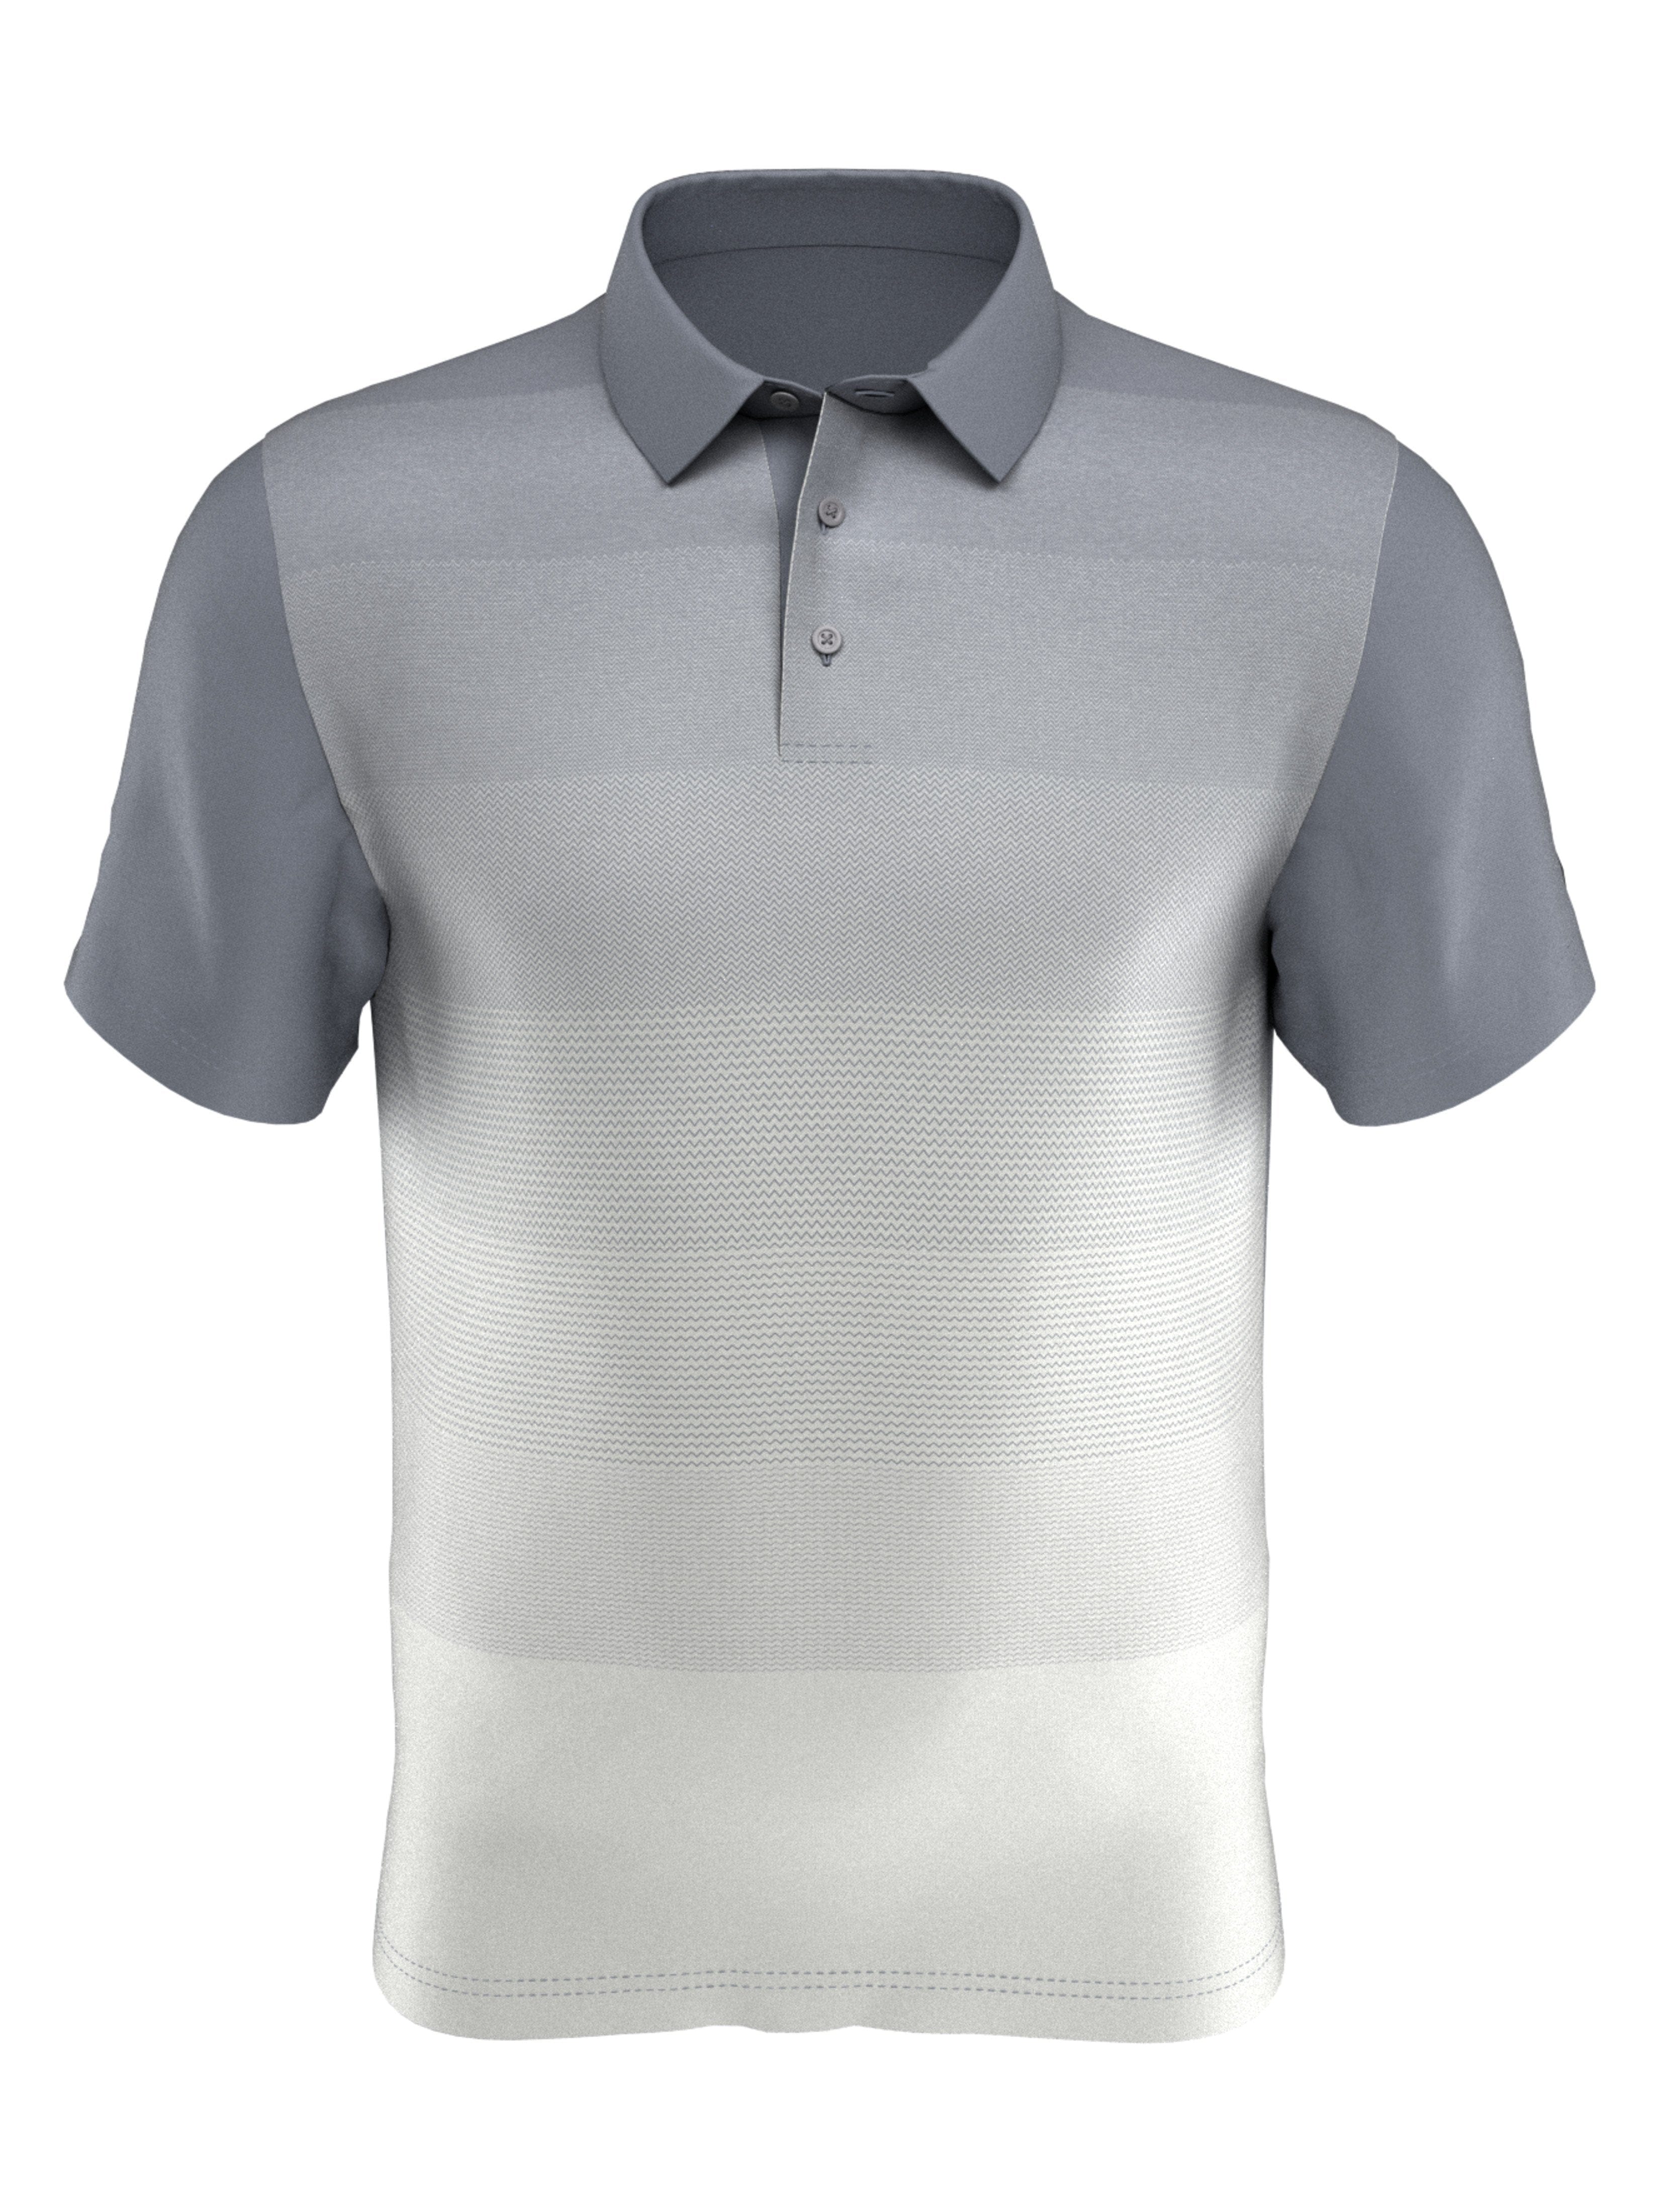 PGA TOUR Apparel Boys Front Ombre Polo Shirt, Size Large, Tradewinds Gray, 100% Polyester | Golf Apparel Shop